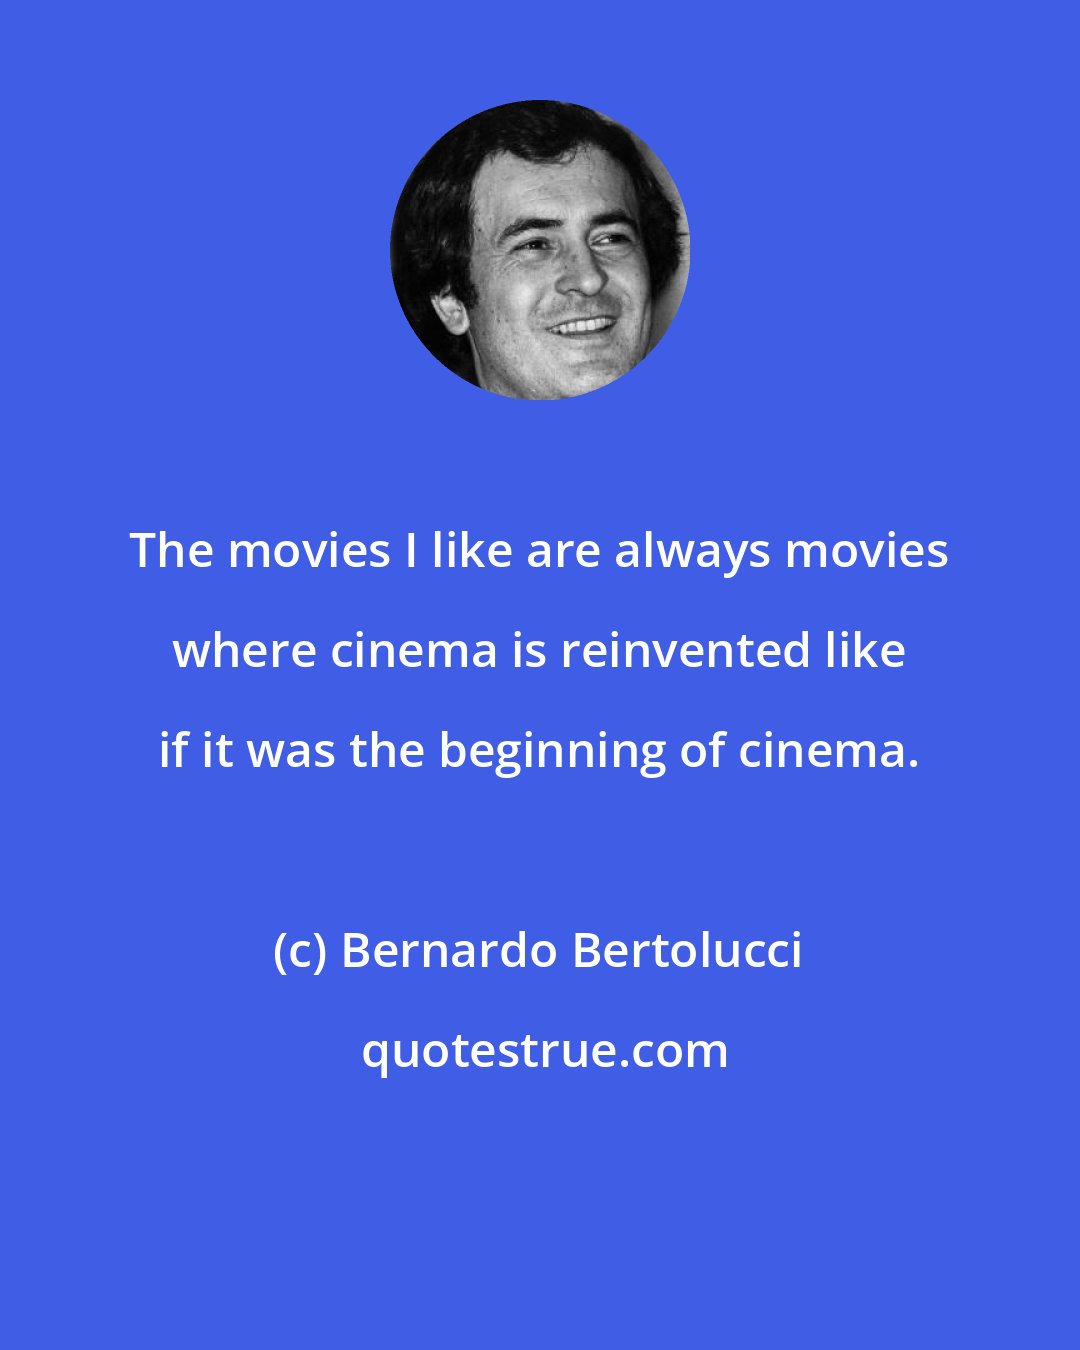 Bernardo Bertolucci: The movies I like are always movies where cinema is reinvented like if it was the beginning of cinema.